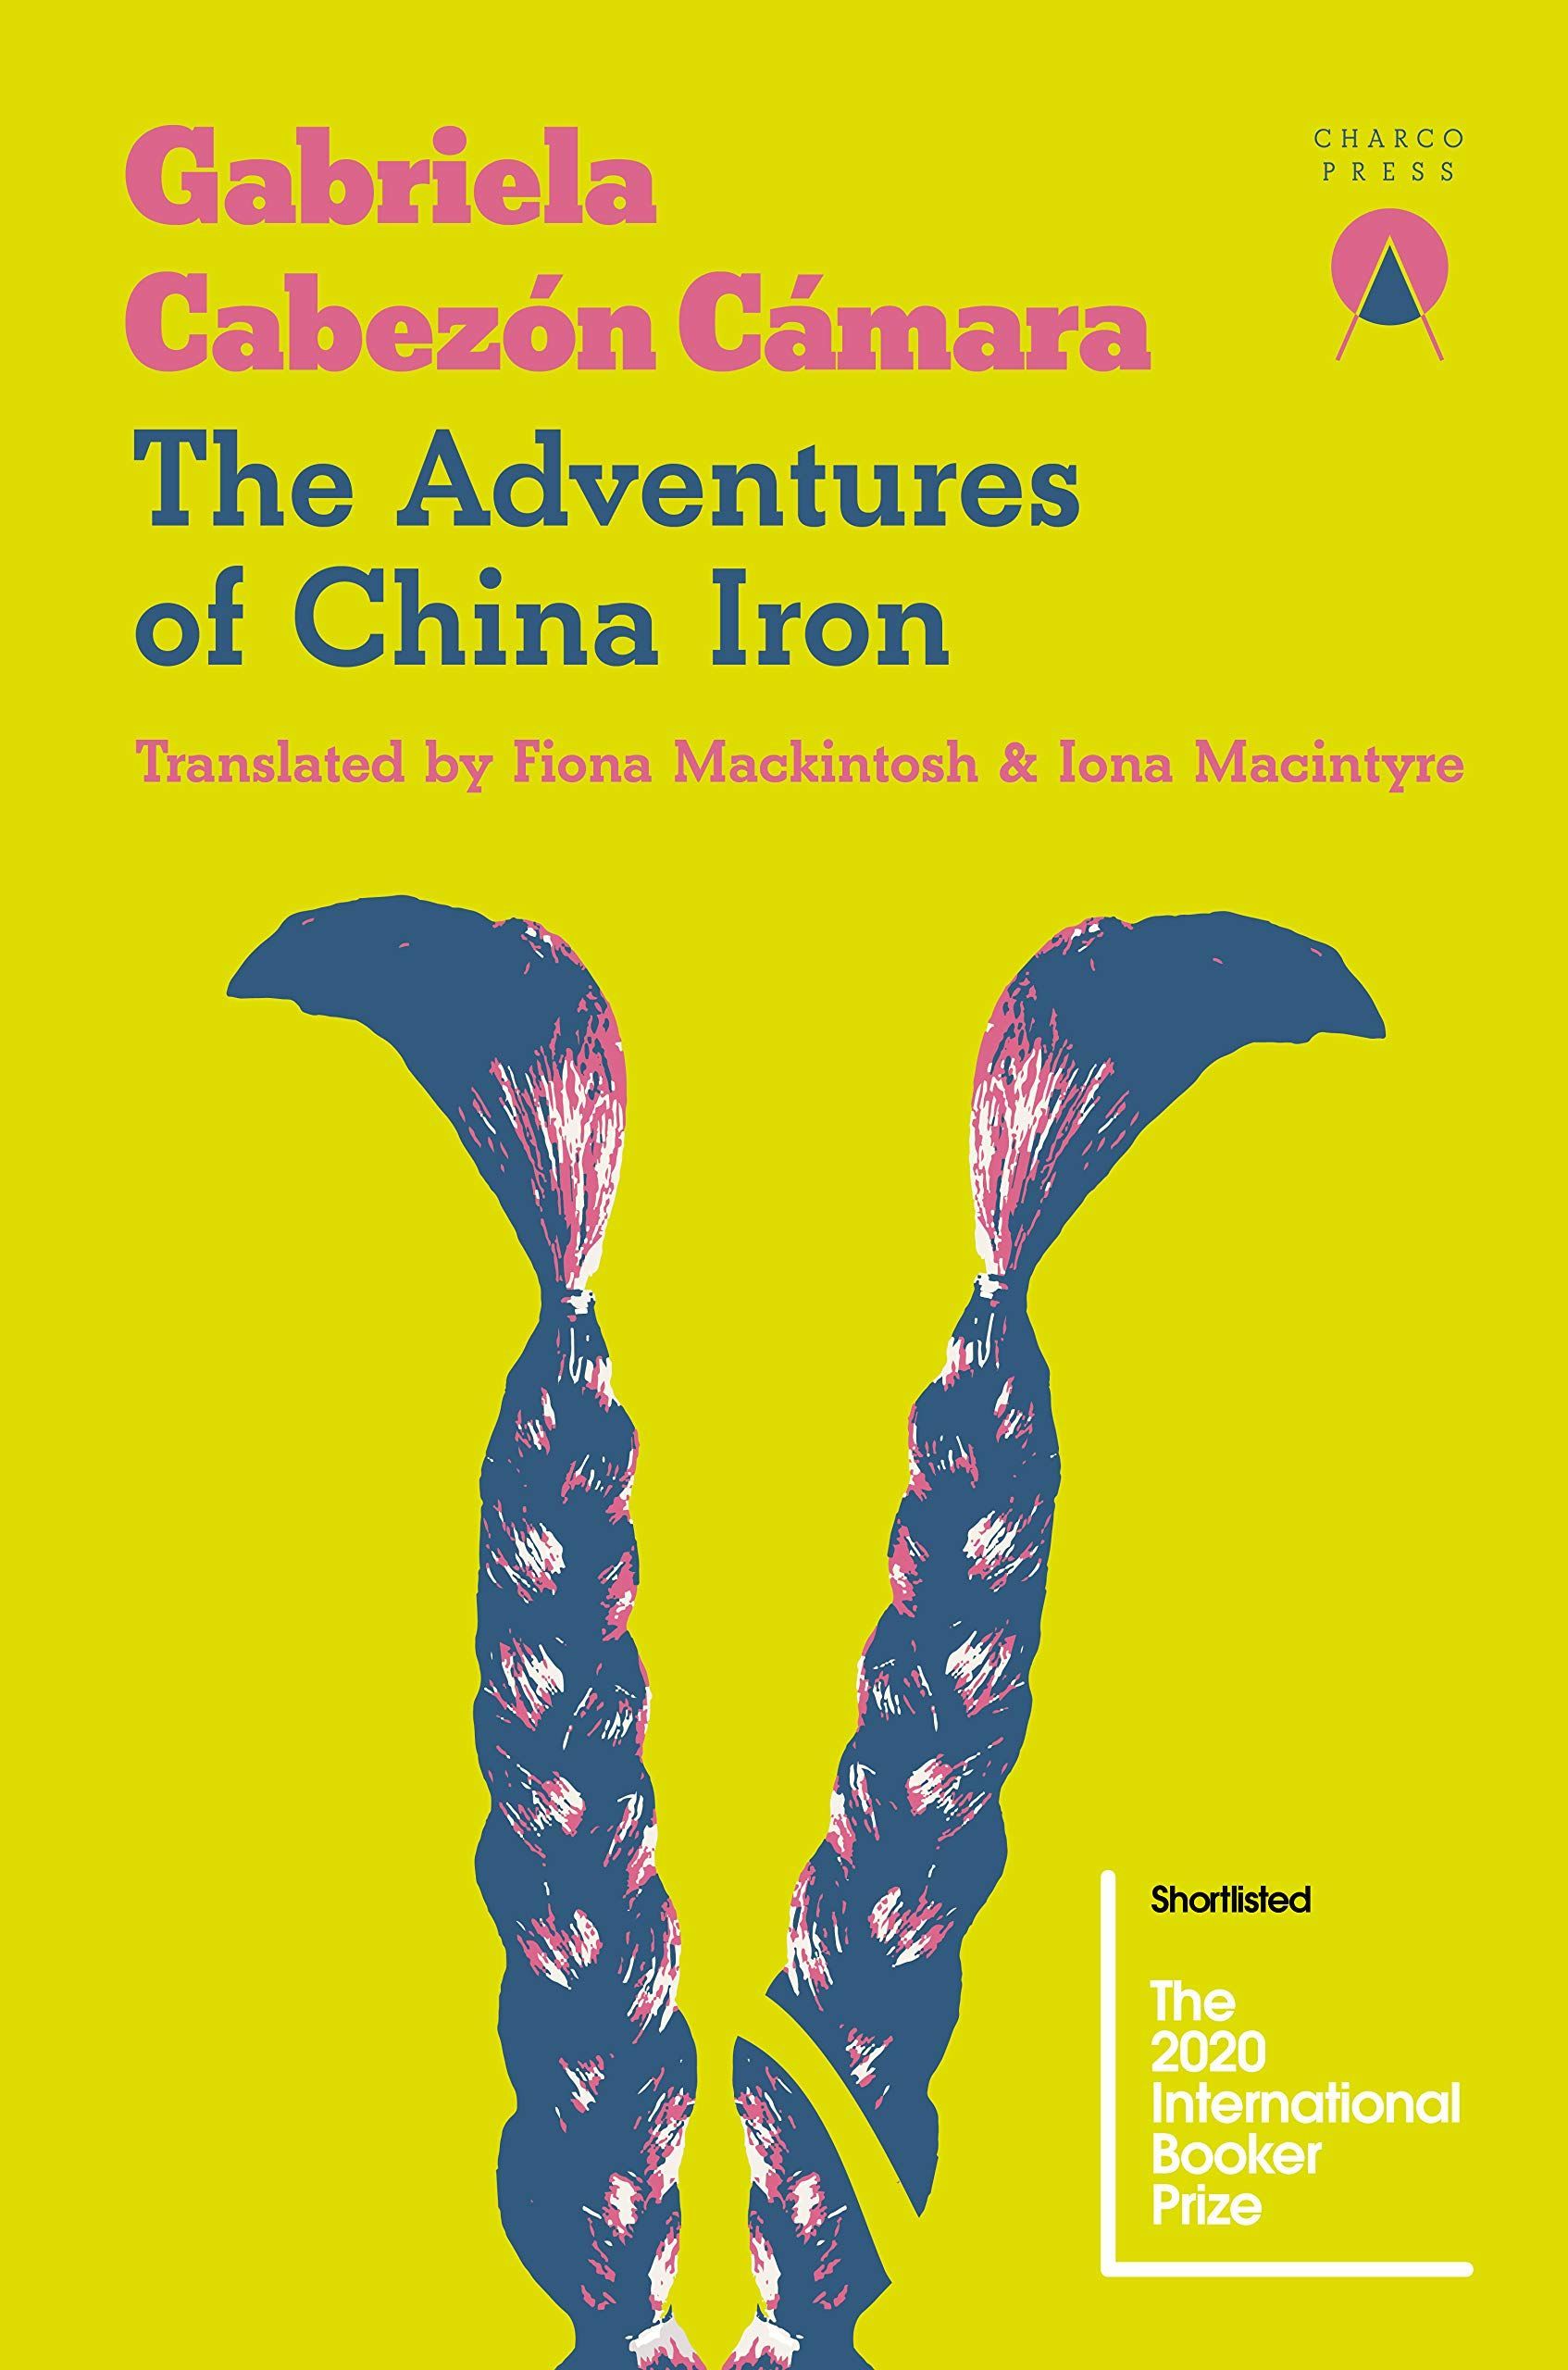 Reclaimed Histories: On Gabriela Cabezón Cámara’s “The Adventures of China Iron”